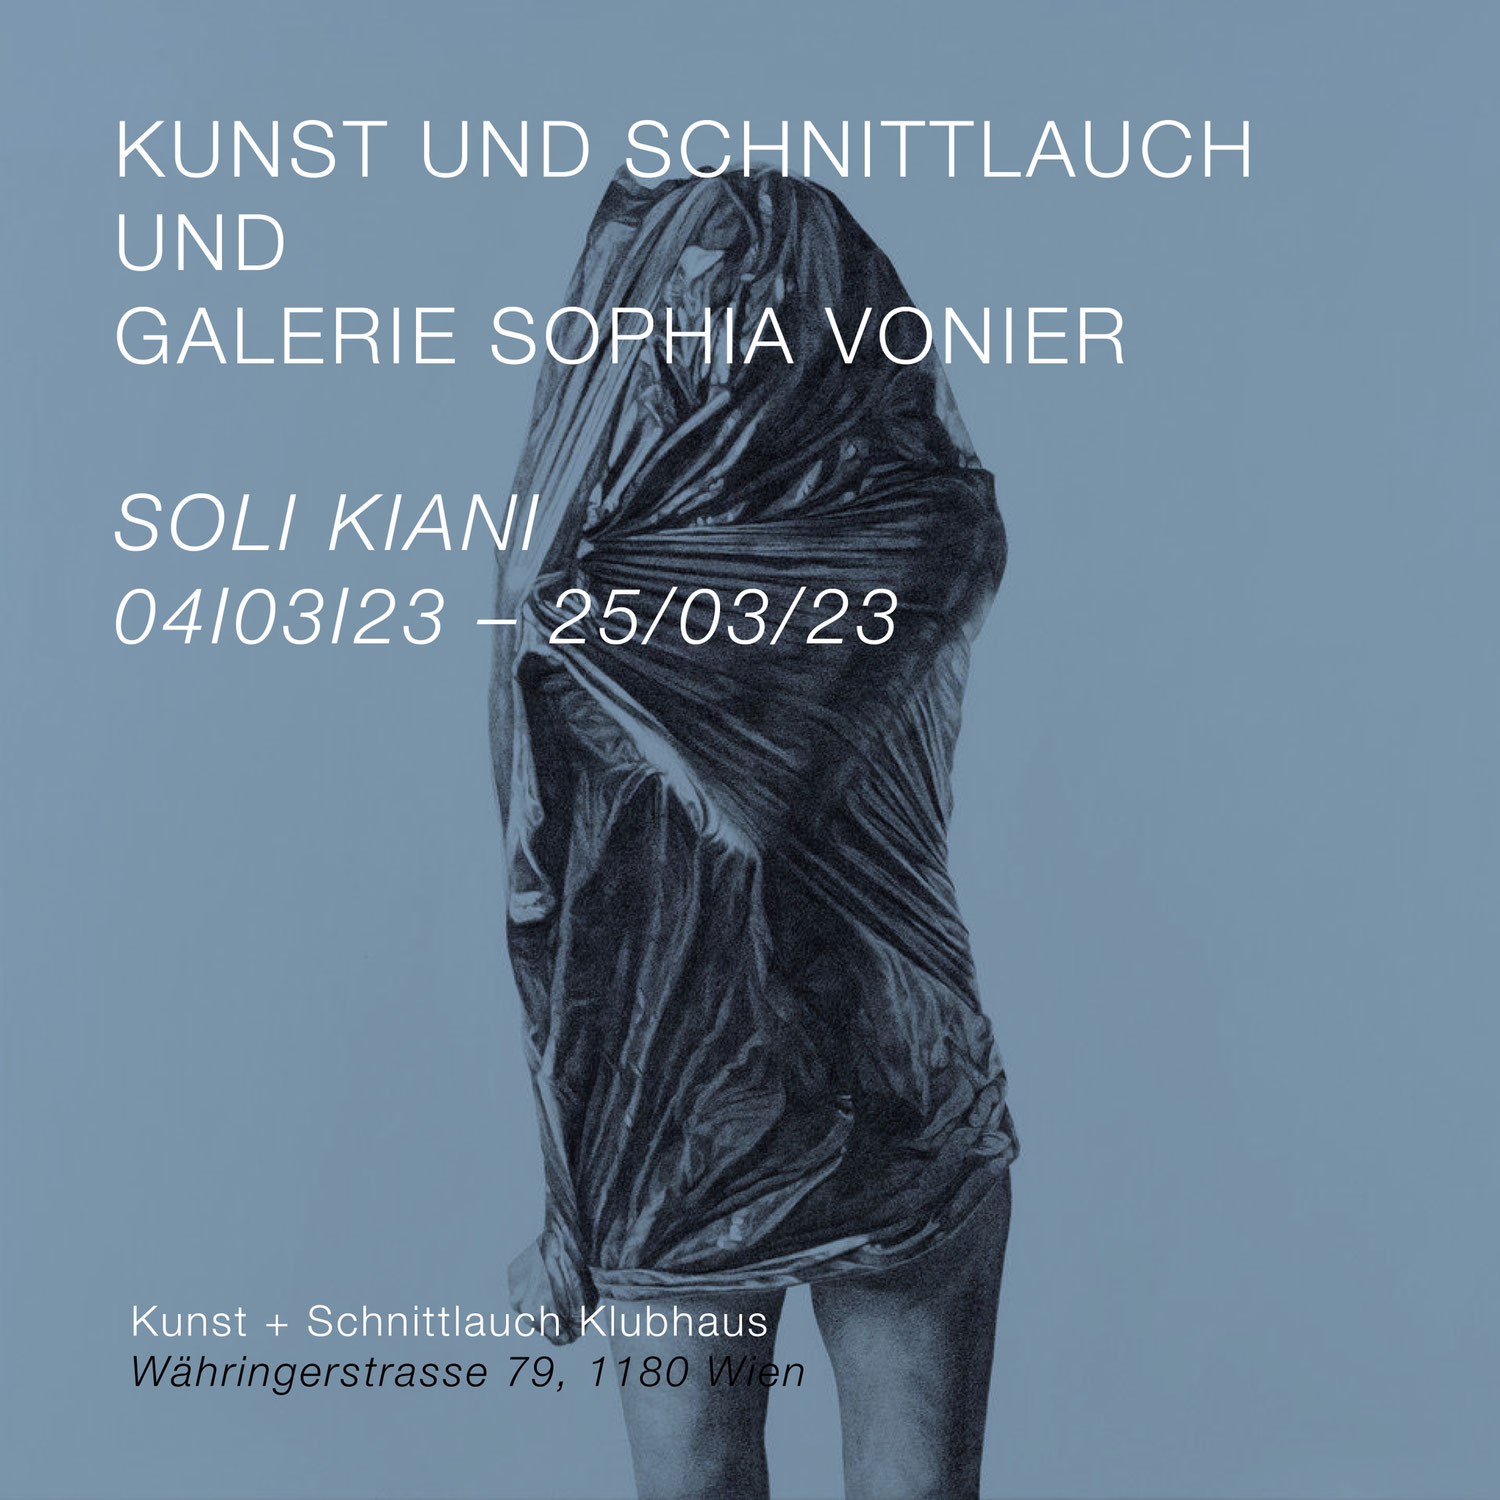 SOLI KIANI  |  Kunst + Schnittlauch